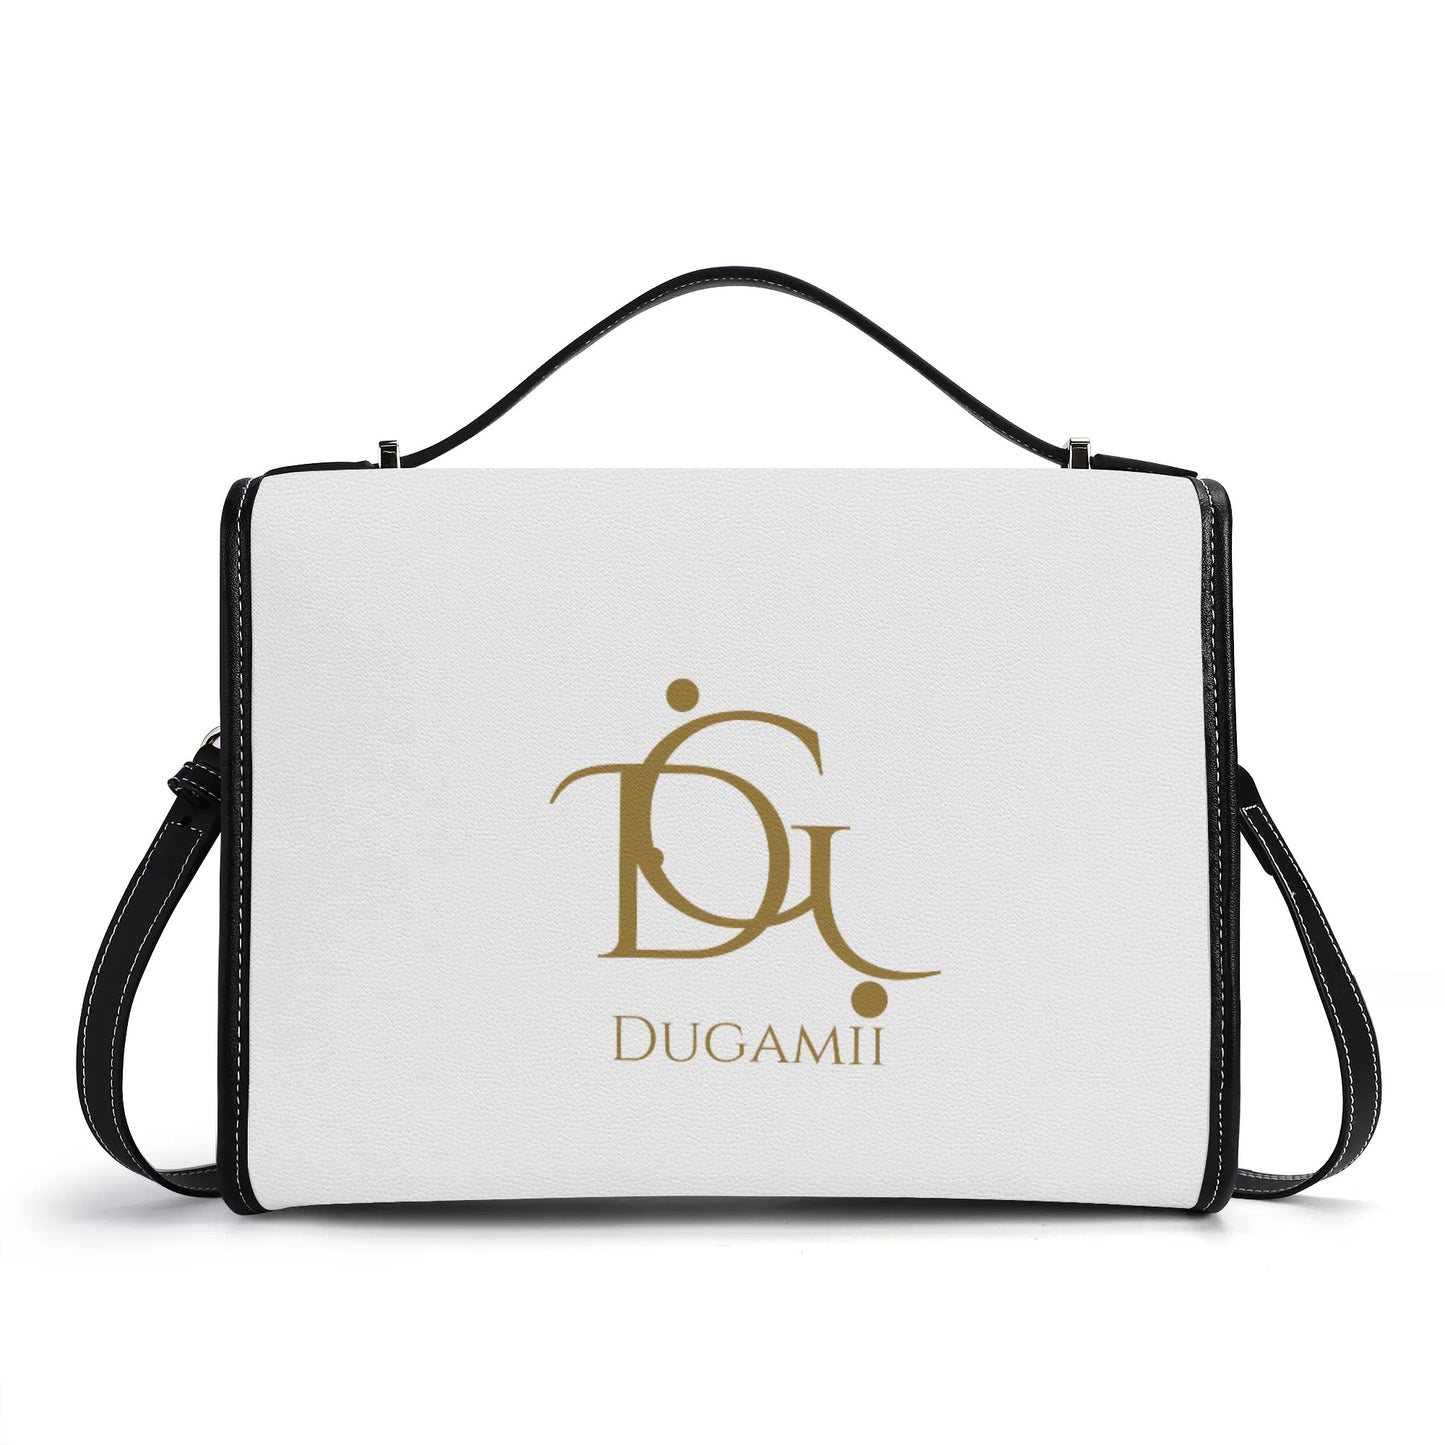 Womens DuGamii PU Leather Satchel Bag